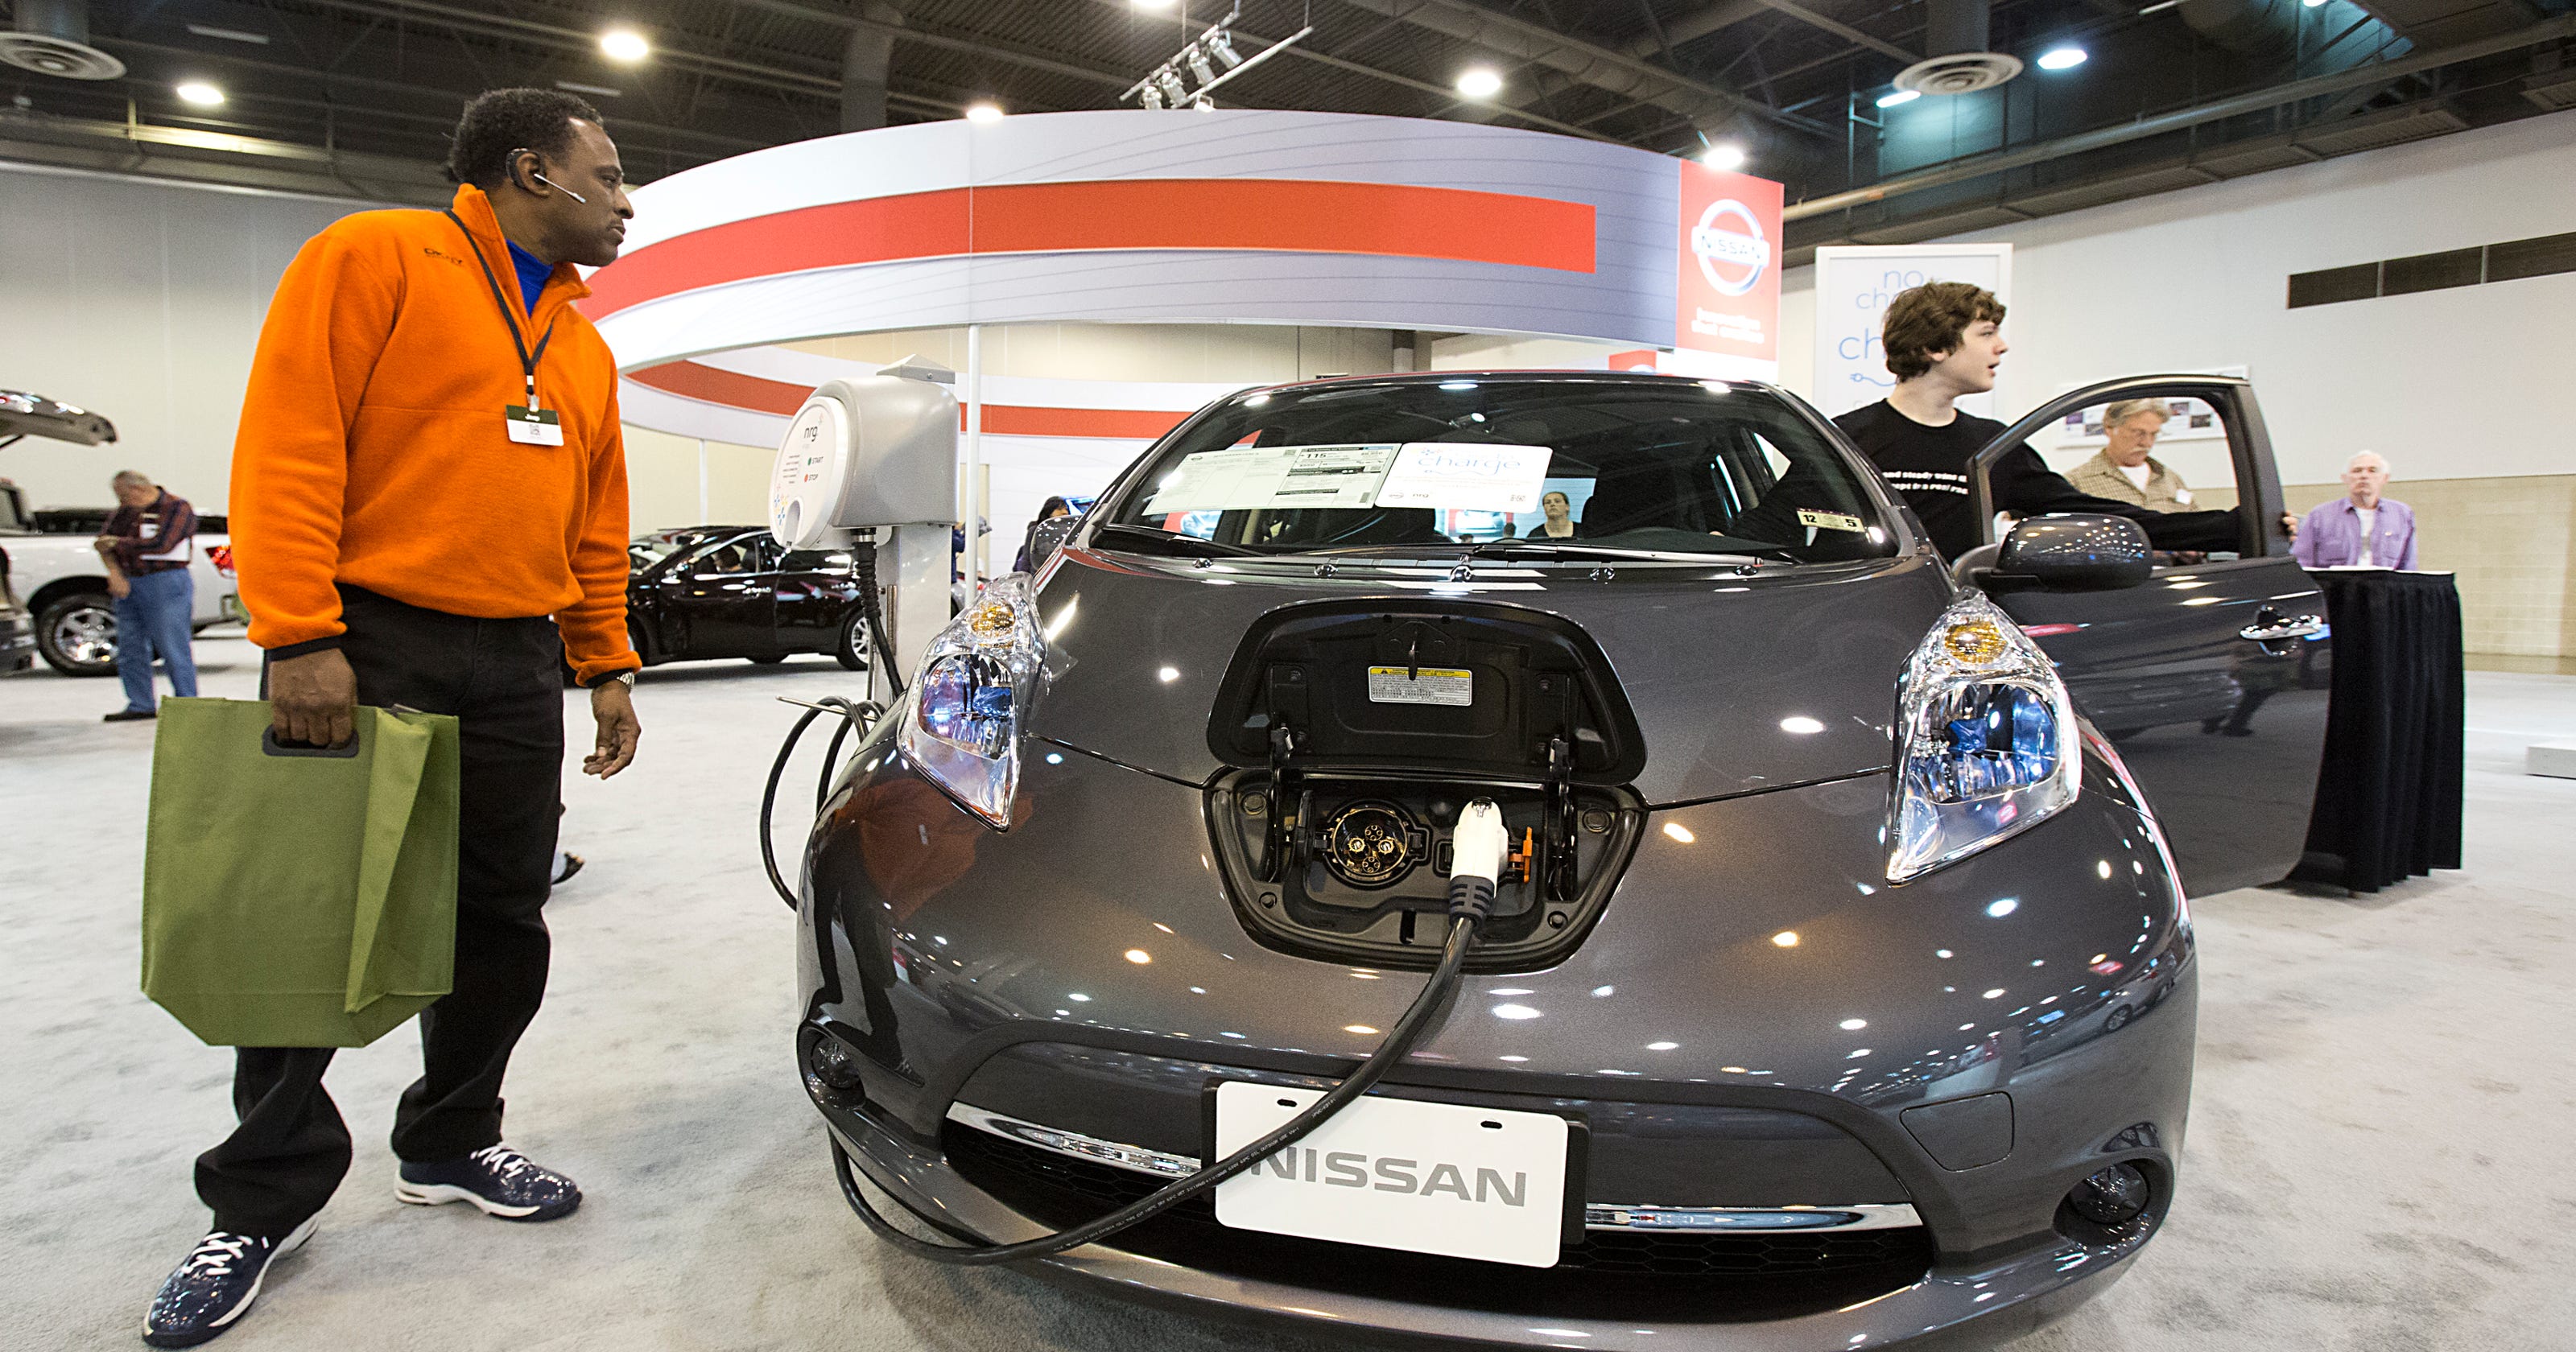 OPINION Electric cars do more environmental harm than good